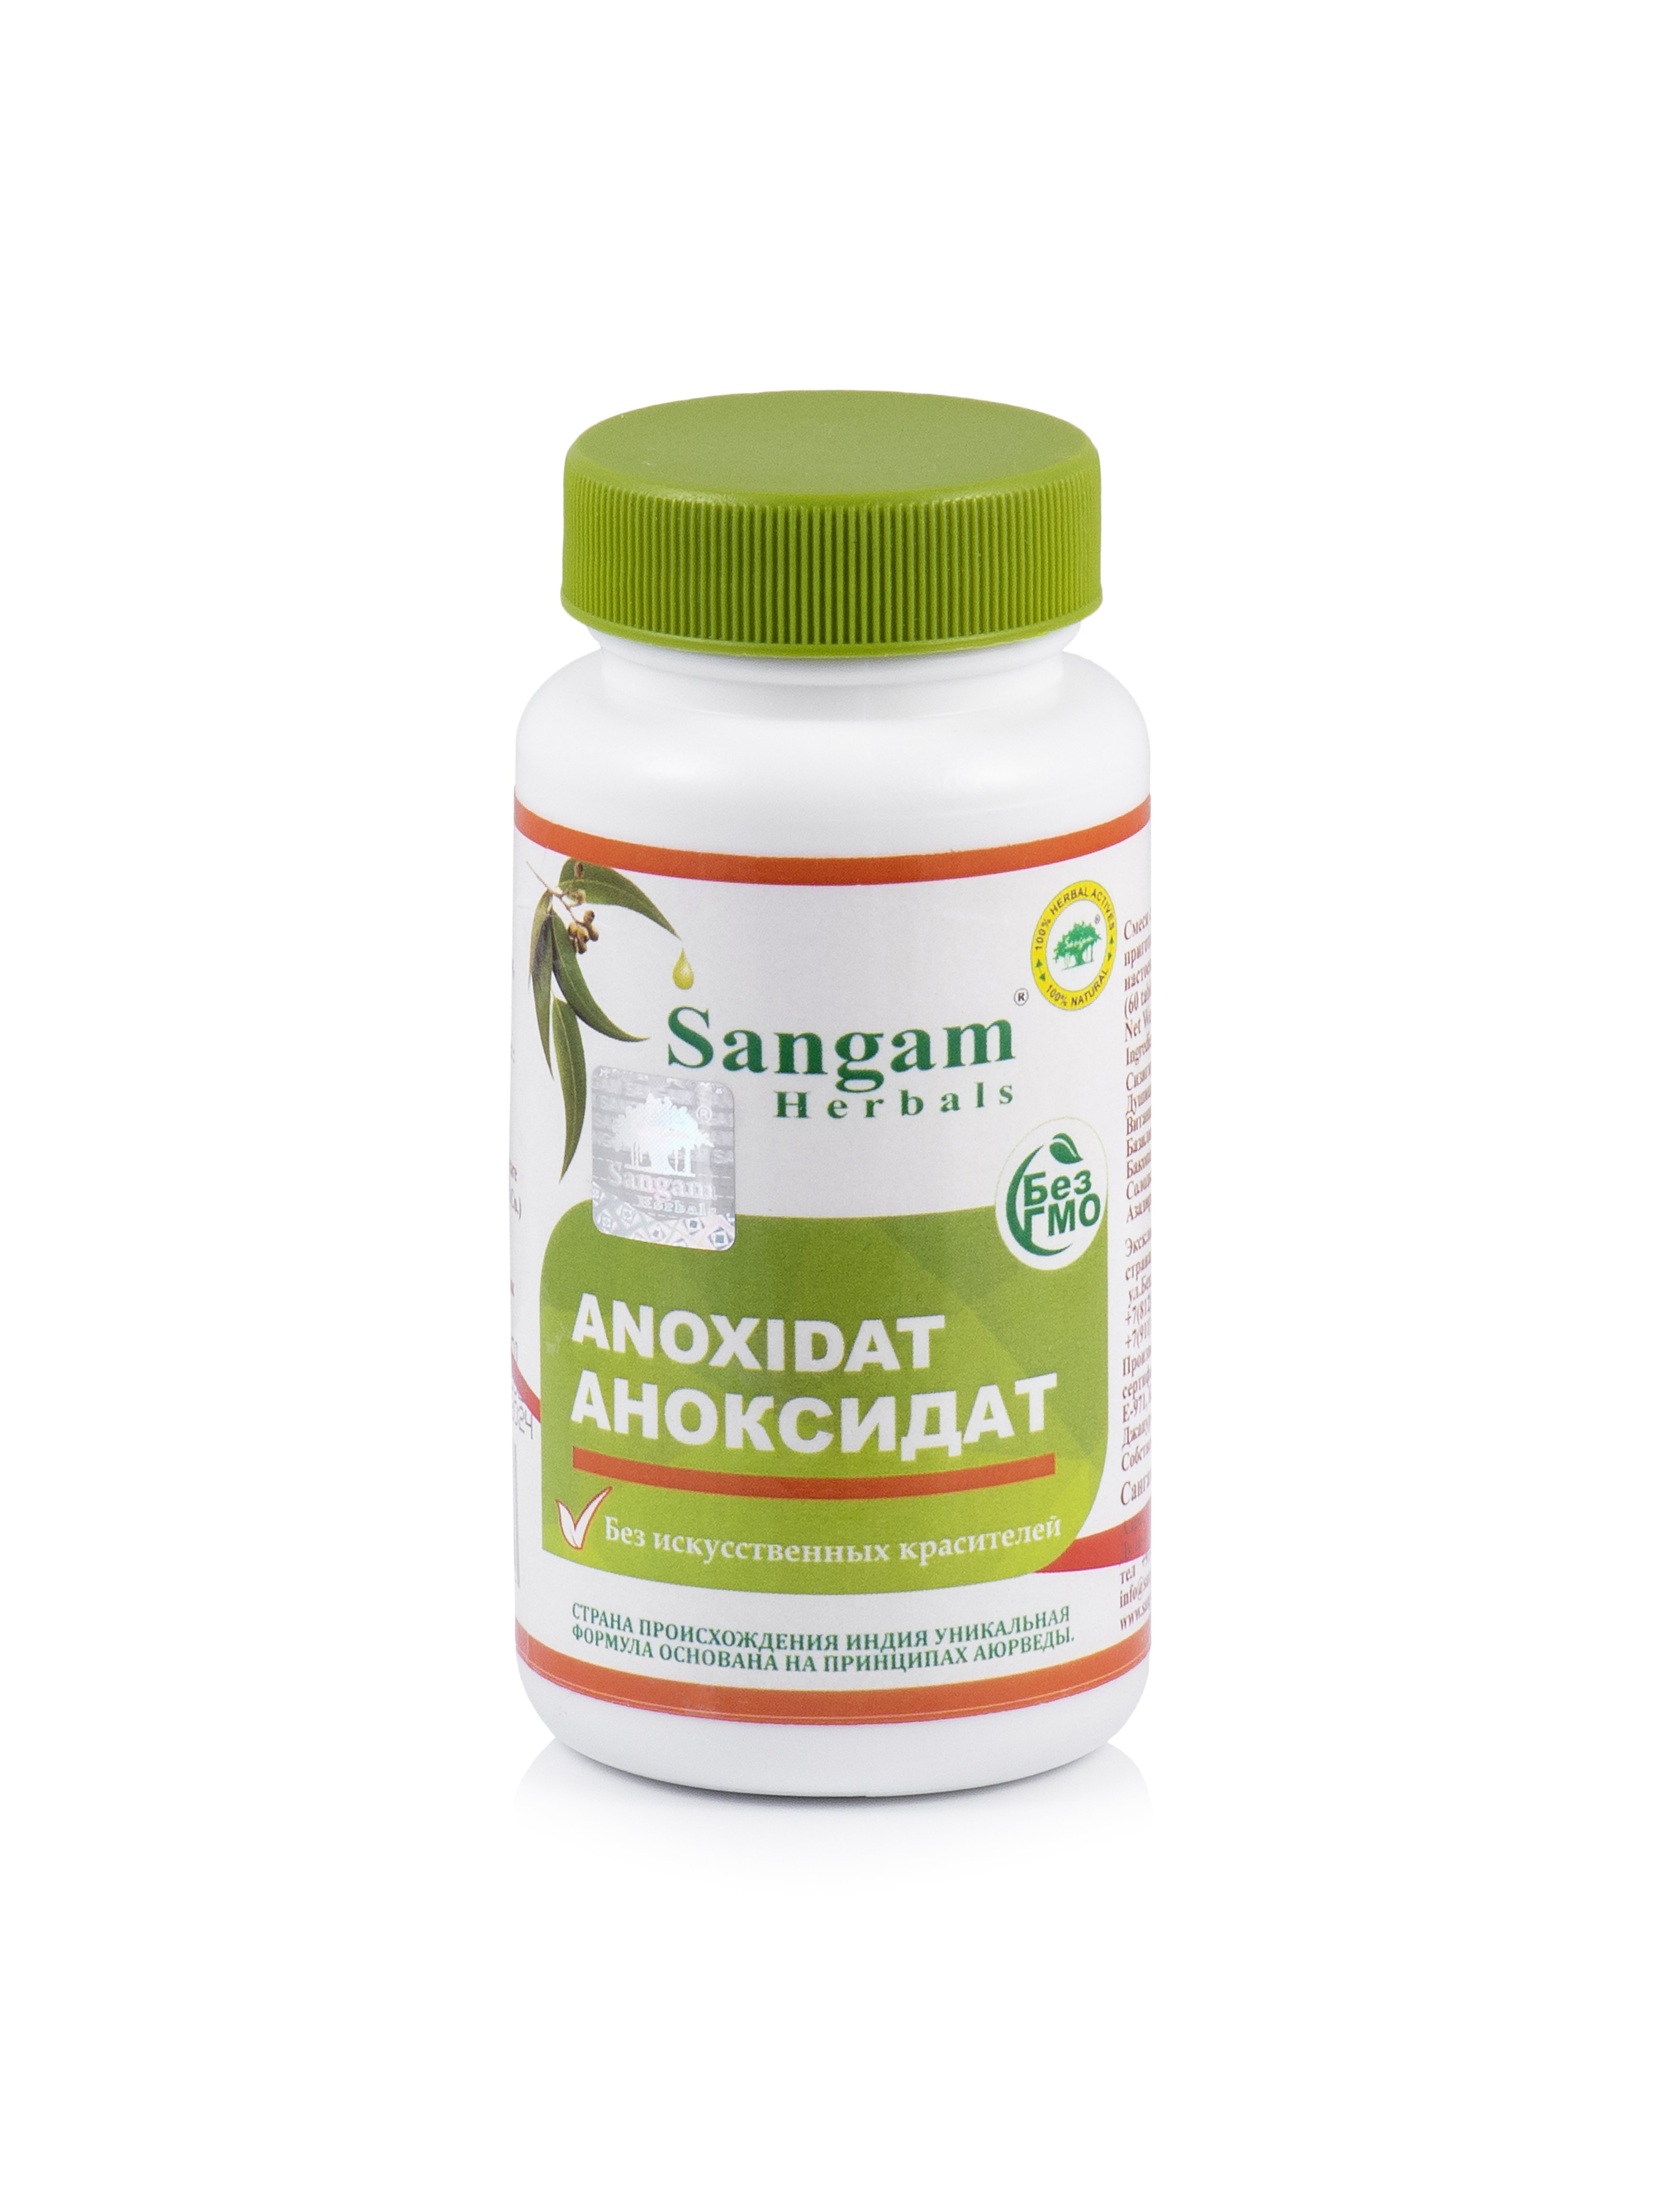 ANOXIDAT, Sangam Herbals (АНОКСИДАТ, Сангам Хербалс), 60 таб. по 750 мг.